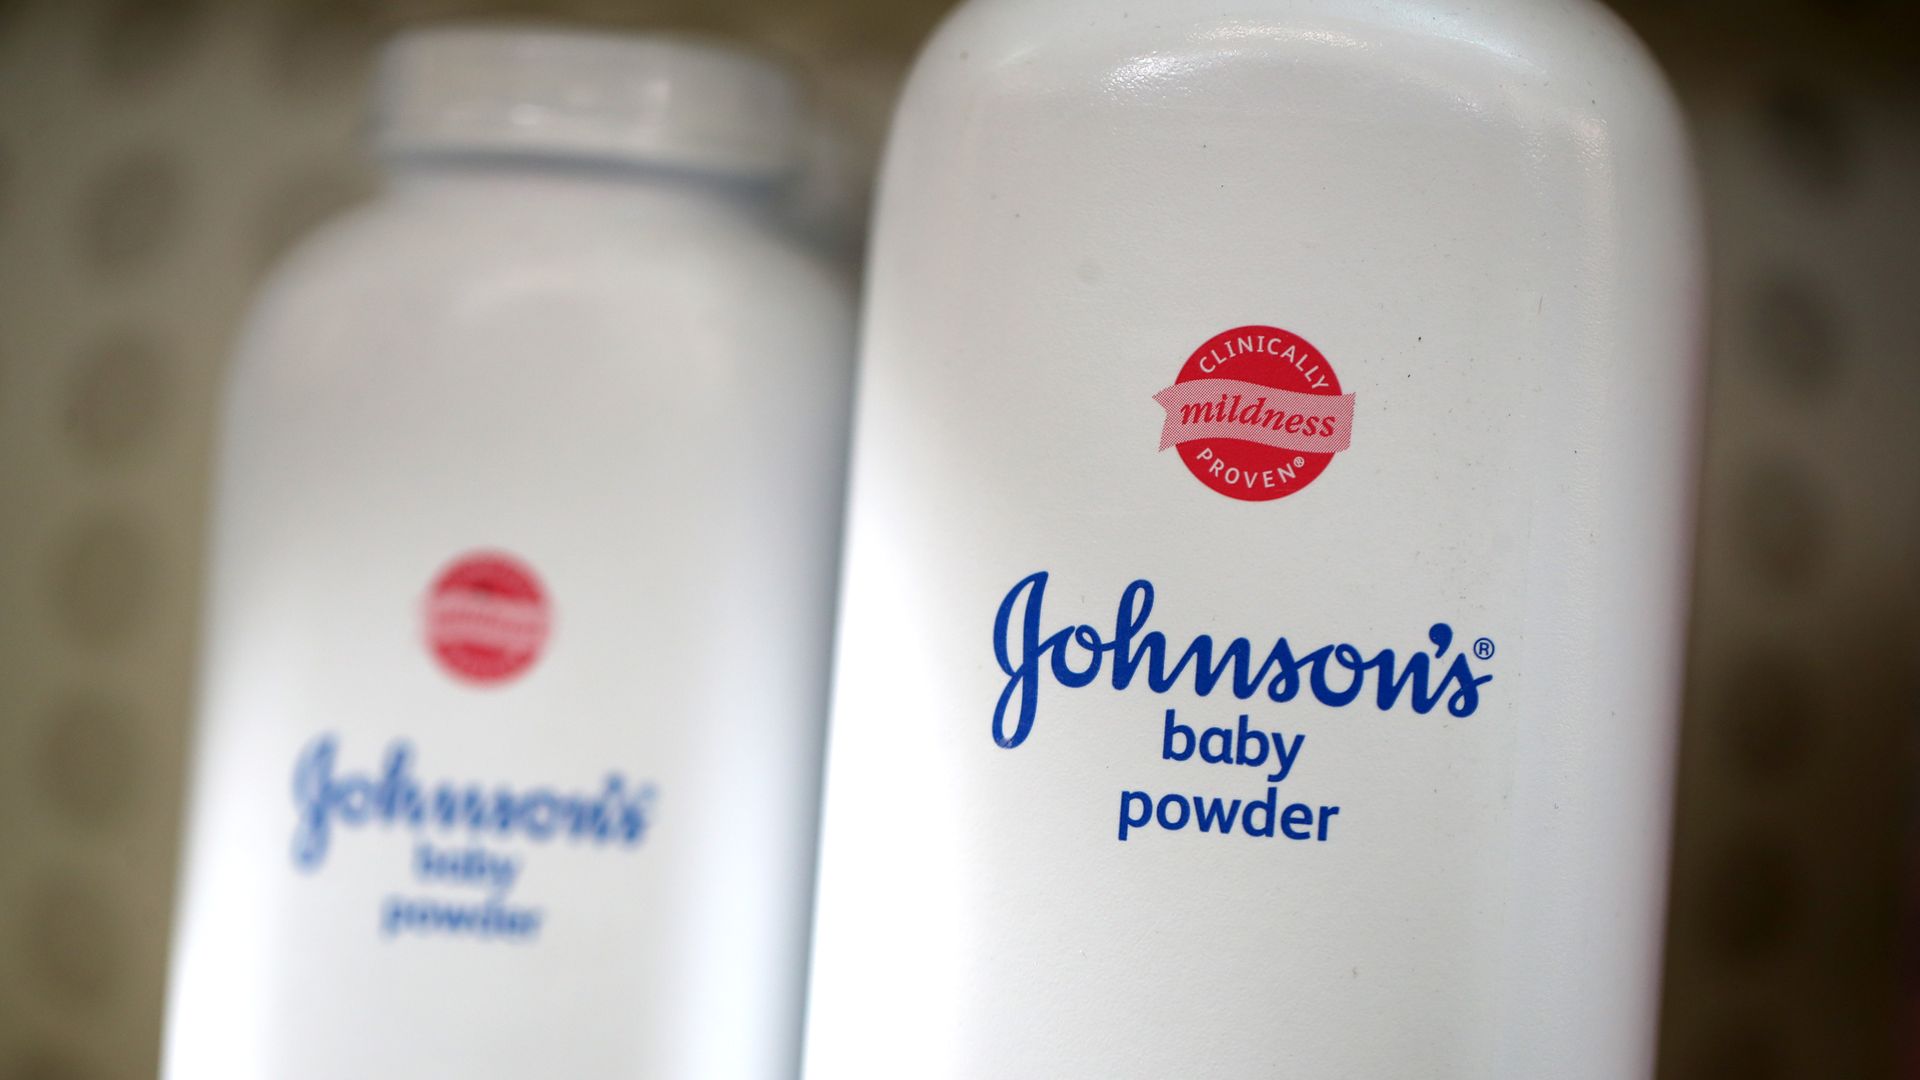 Two bottles of Johnson's baby powder